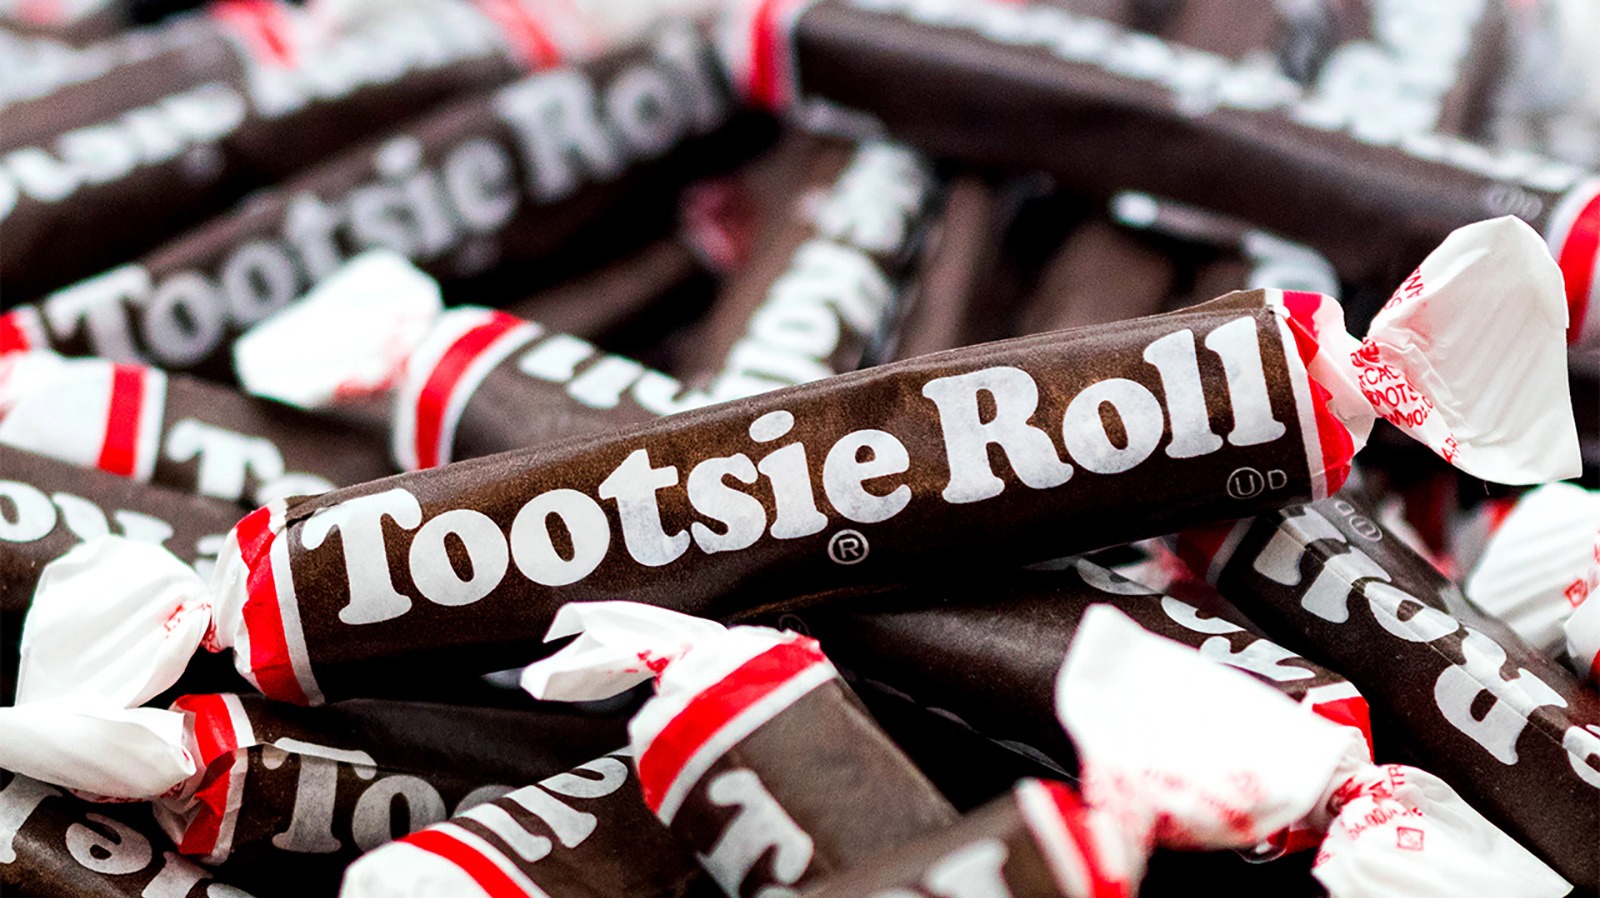 The Untold Truth Of Tootsie Rolls